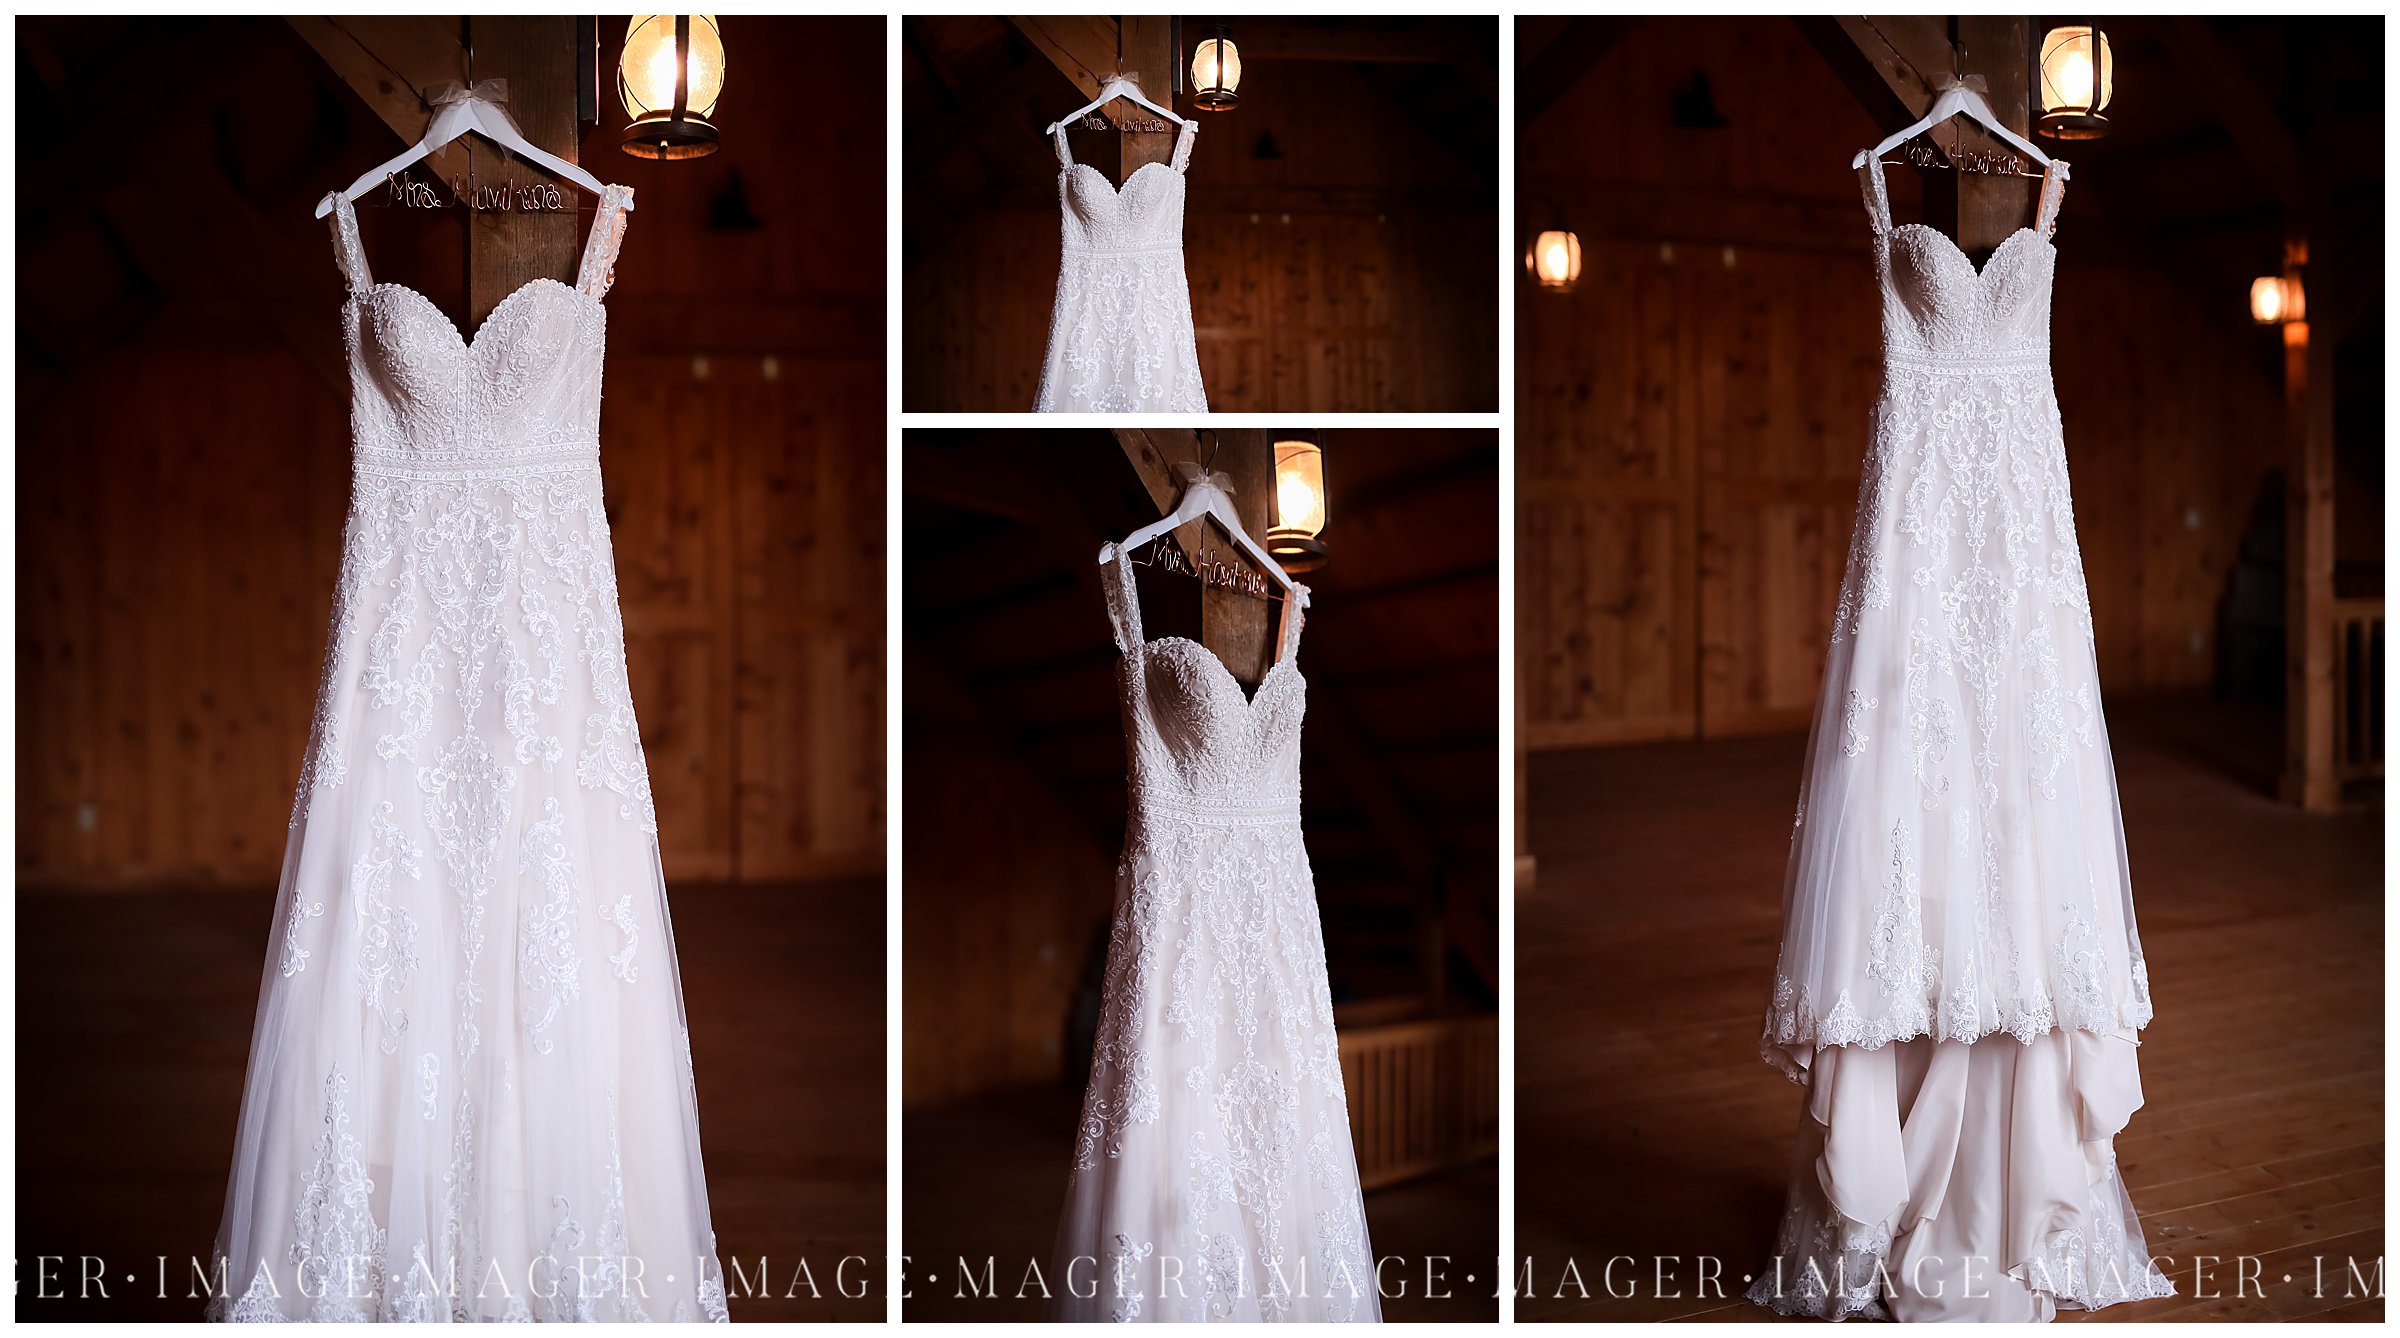 wedding dress hanging in barn